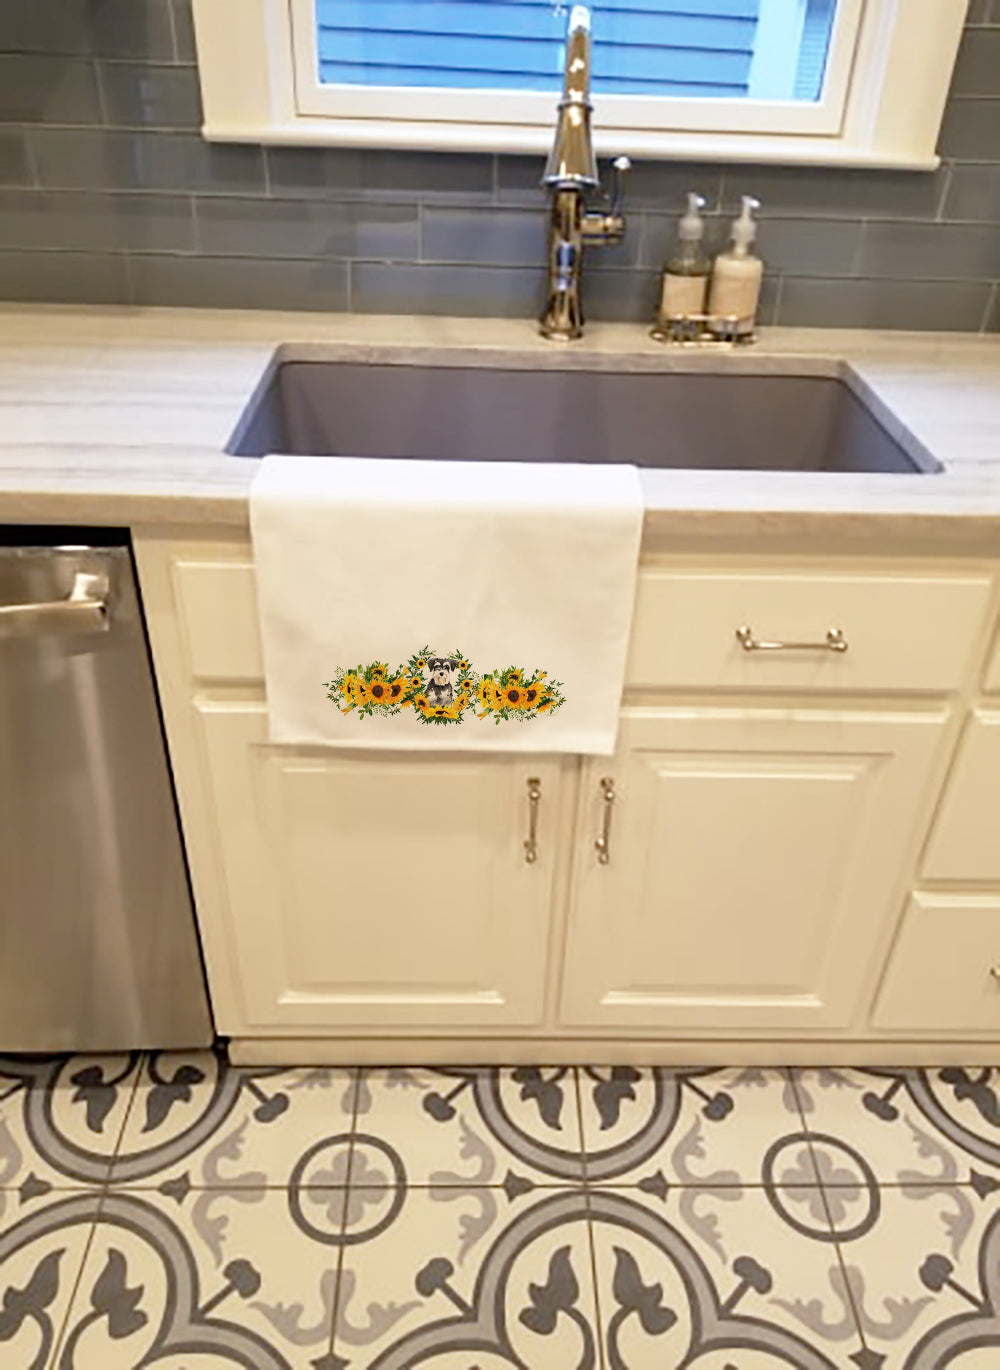 Buy this Schnauzer # in Sunflowers White Kitchen Towel Set of 2